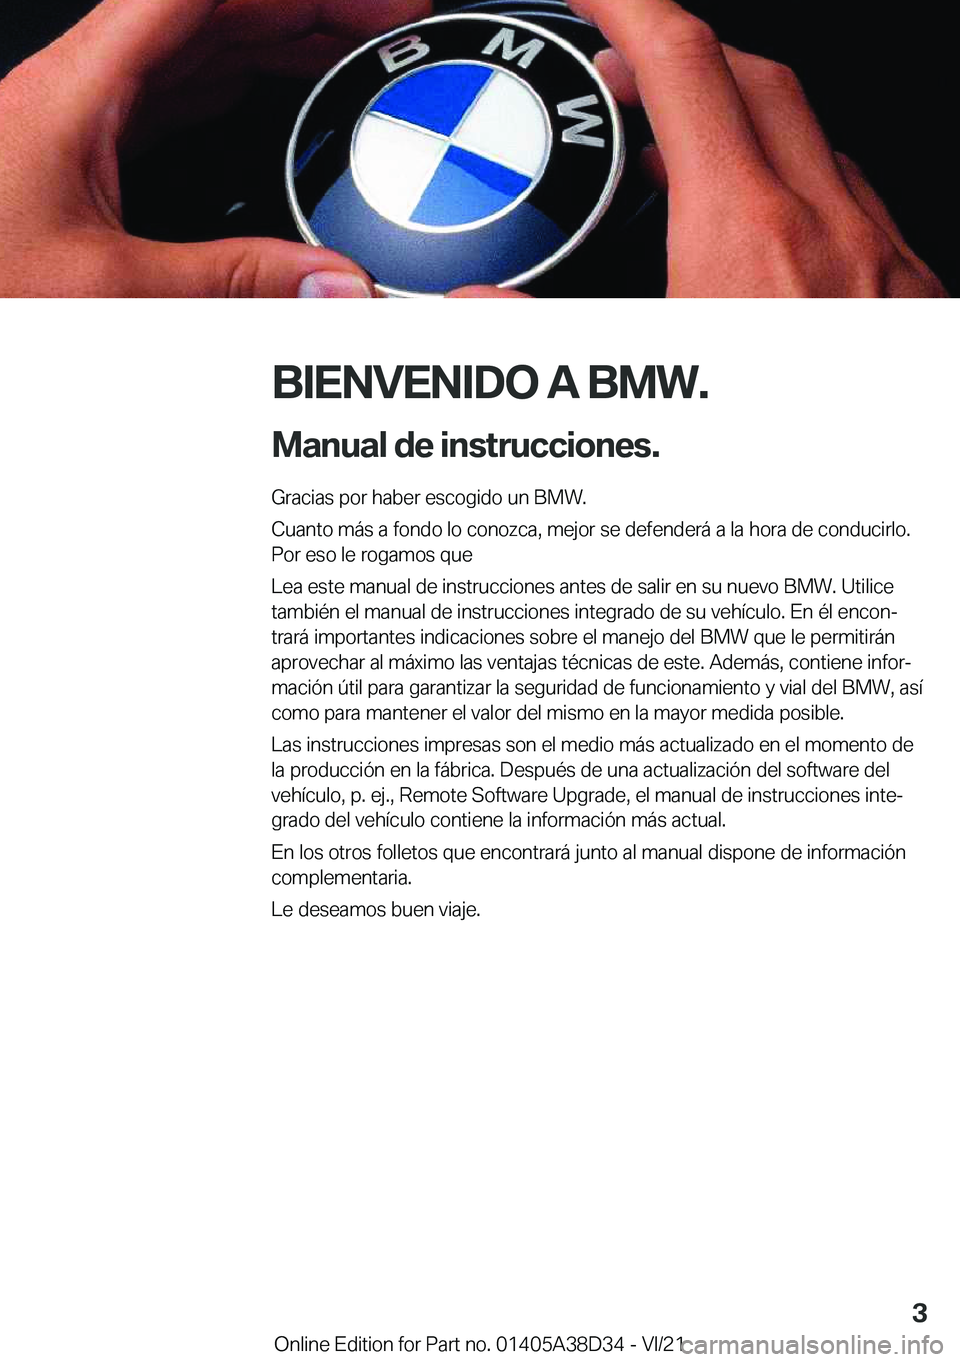 BMW 8 SERIES 2022  Manuales de Empleo (in Spanish) �B�I�E�N�V�E�N�I�D�O��A��B�M�W�.
�M�a�n�u�a�l��d�e��i�n�s�t�r�u�c�c�i�o�n�e�s�. �G�r�a�c�i�a�s��p�o�r��h�a�b�e�r��e�s�c�o�g�i�d�o��u�n��B�M�W�.
�C�u�a�n�t�o��m�